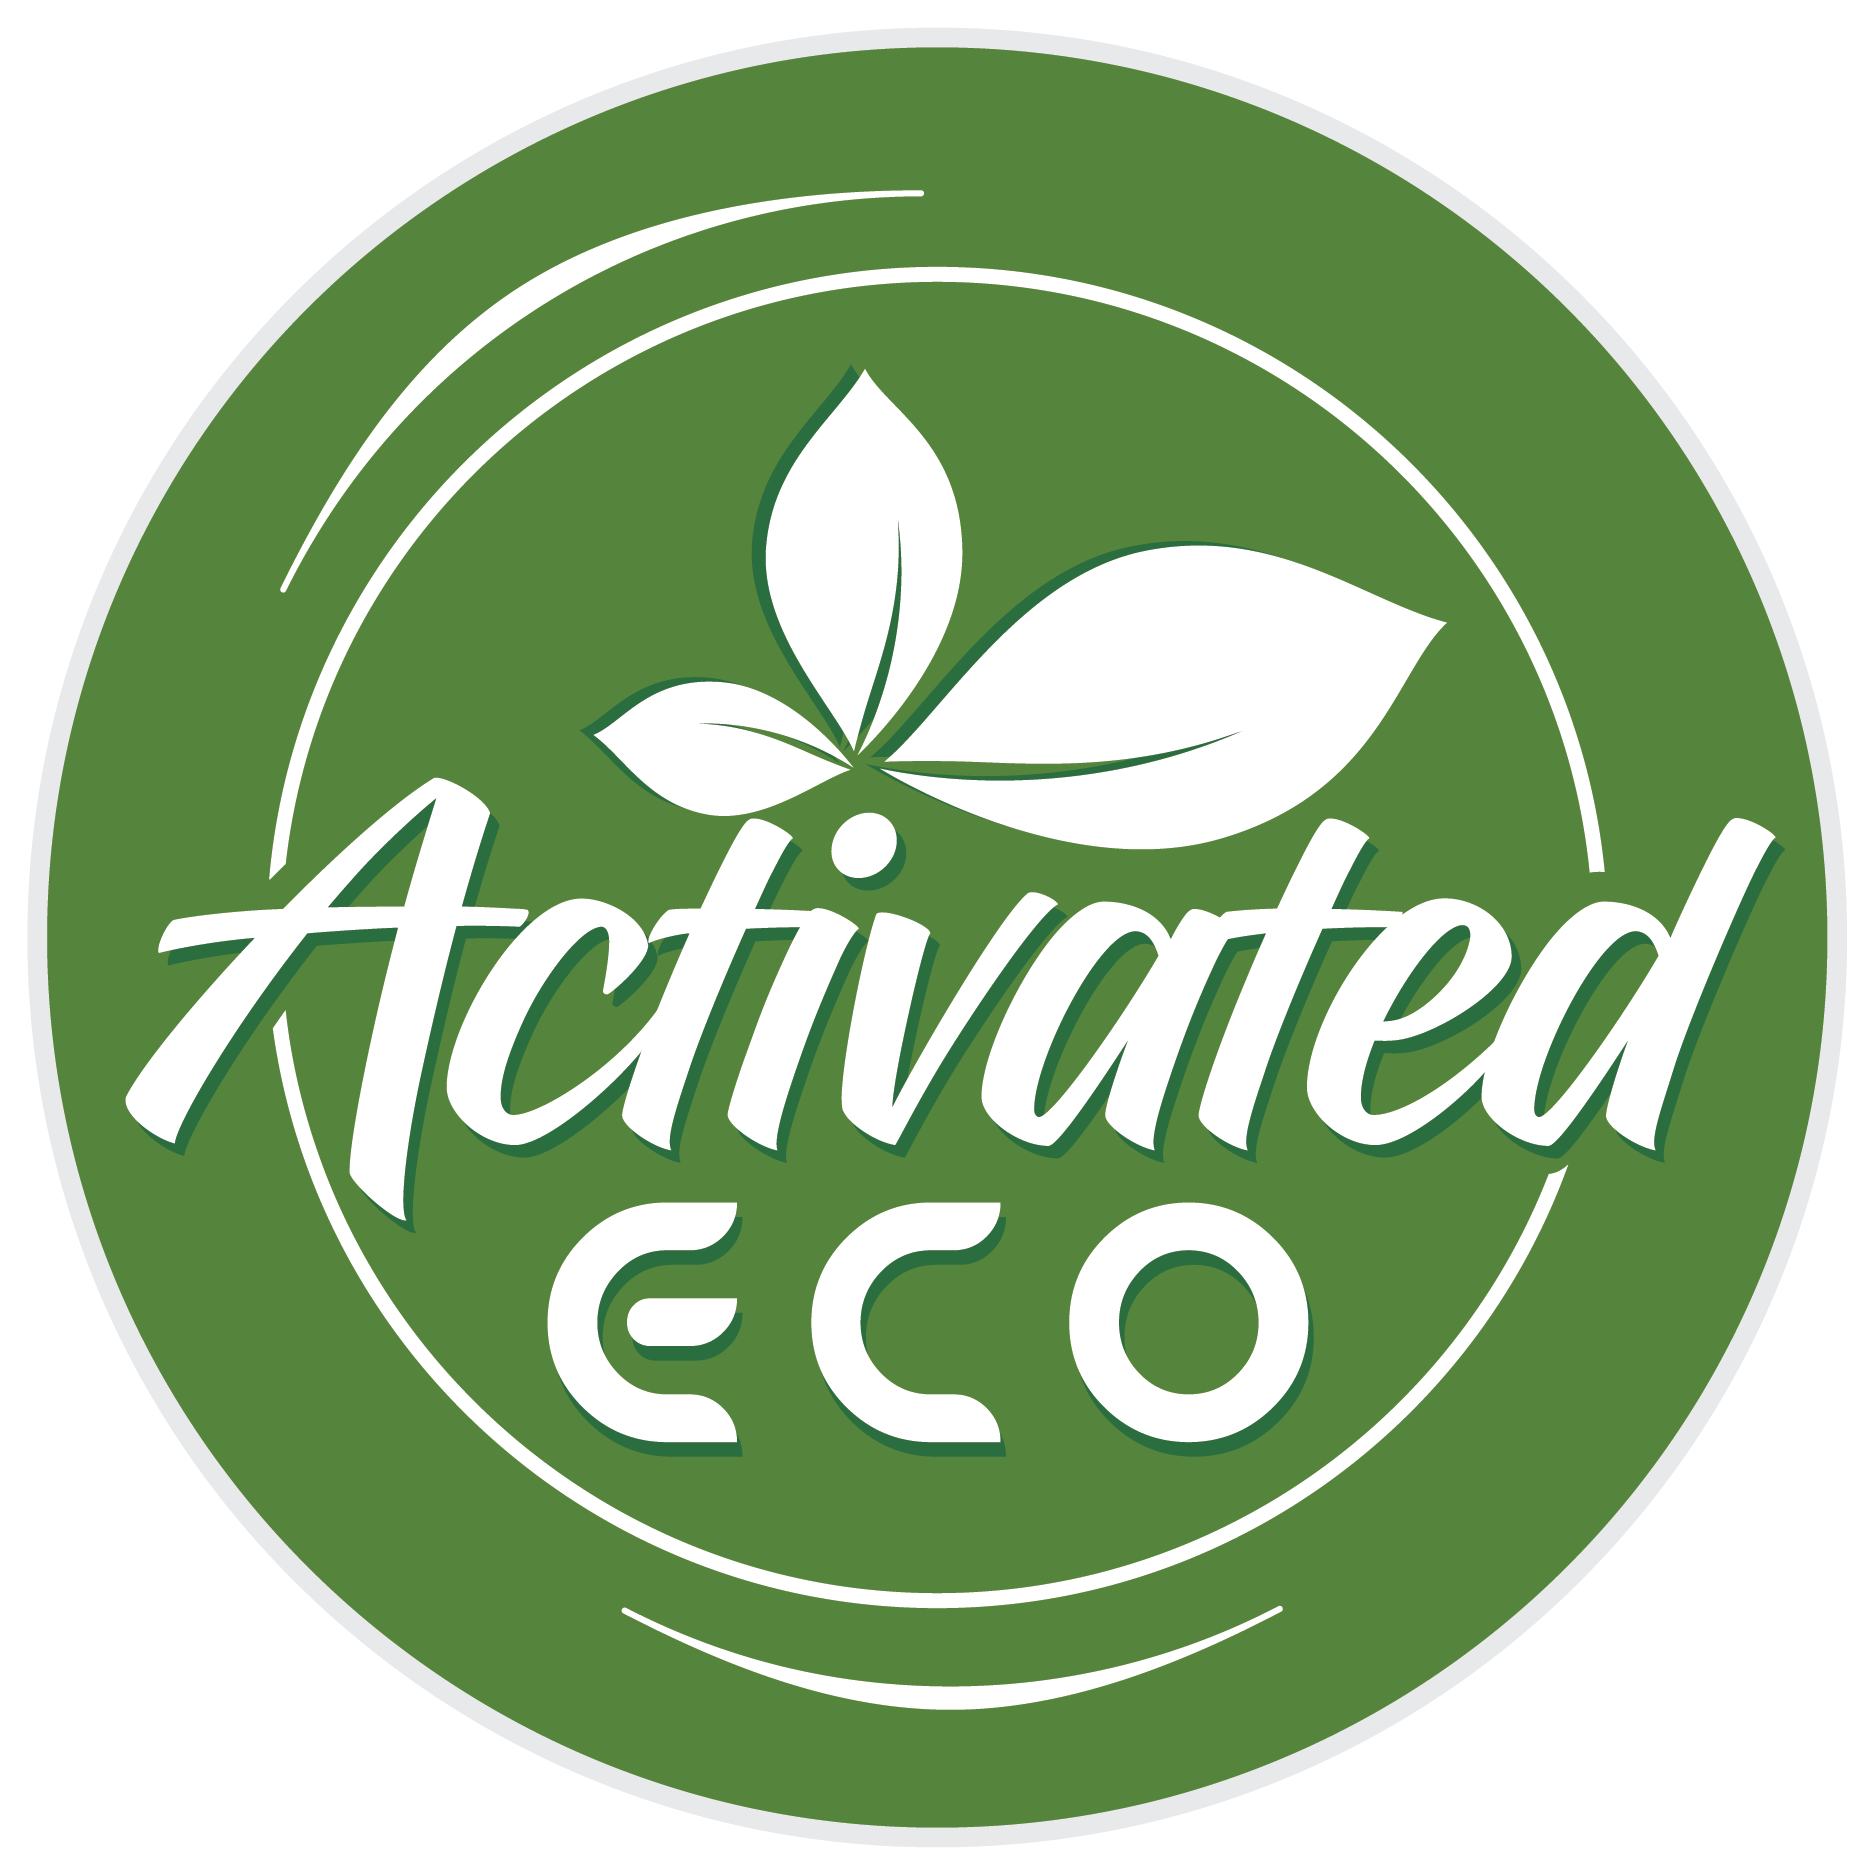 Activated Eco logo